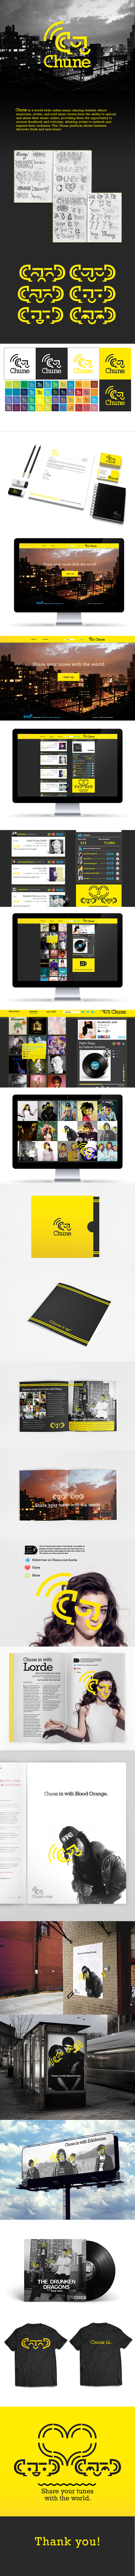 logo brand identity identity editorial Layout fictional Brand black and yellow Web design tshirt album art vinyl vinyl design Album print